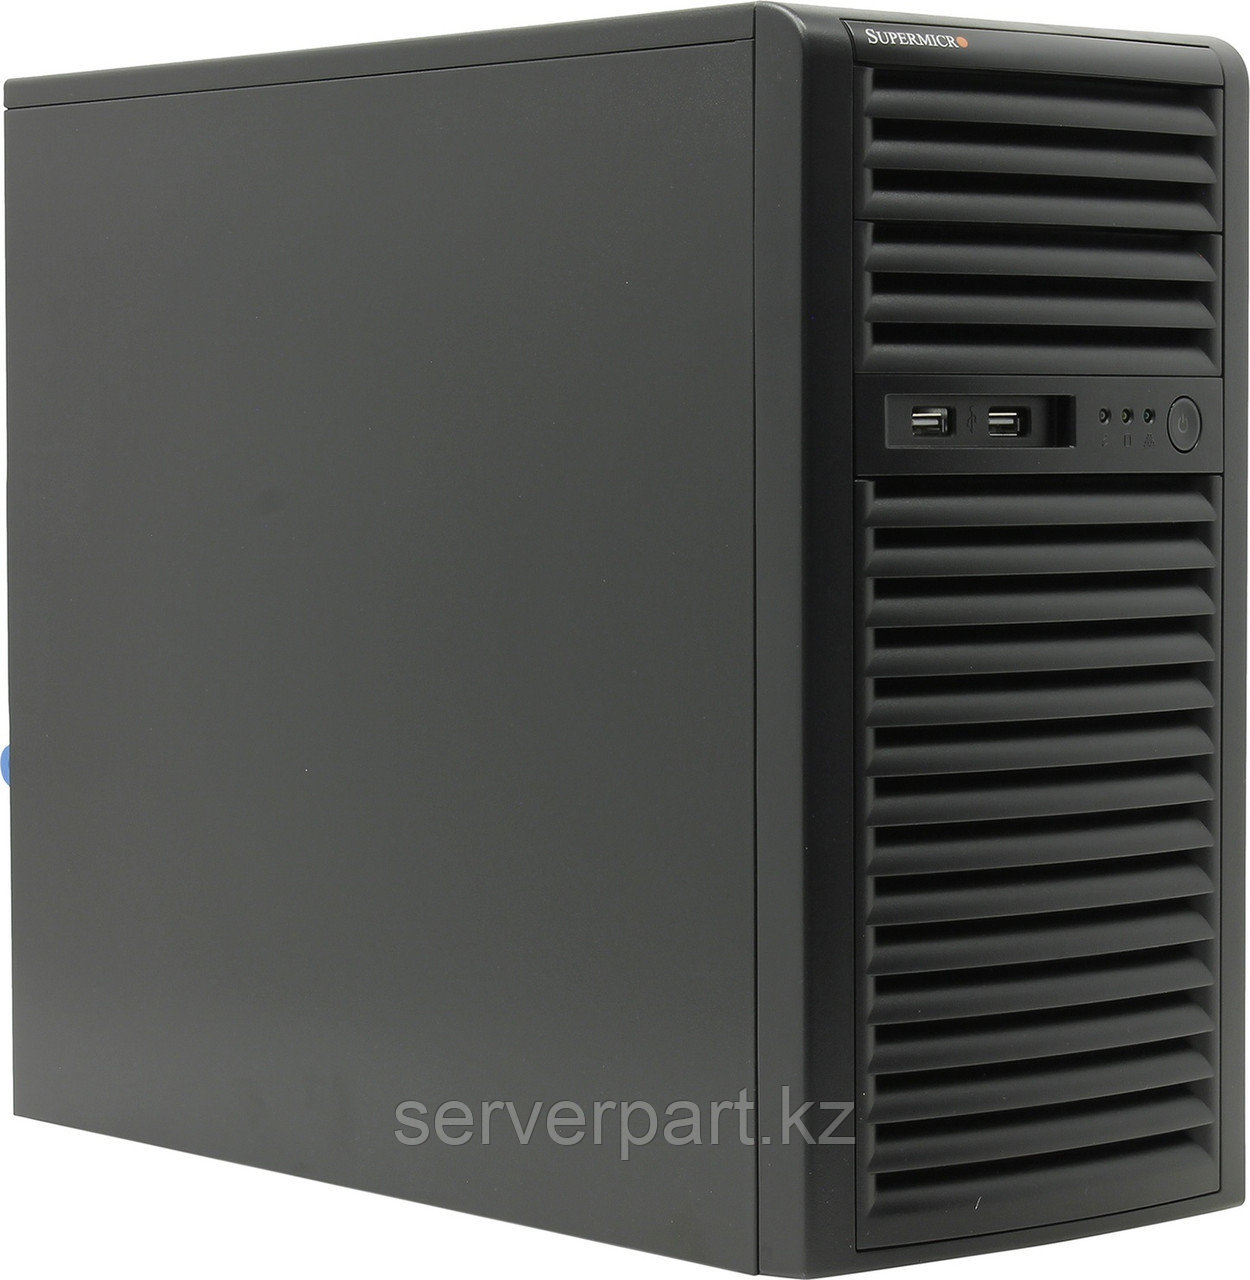 Сервер Supermicro SYS-5039D Tower/4-core intel xeon E3-1220v6 3GHz/32GB EUDIMM/1x480GB SSD MU Hyb, фото 1